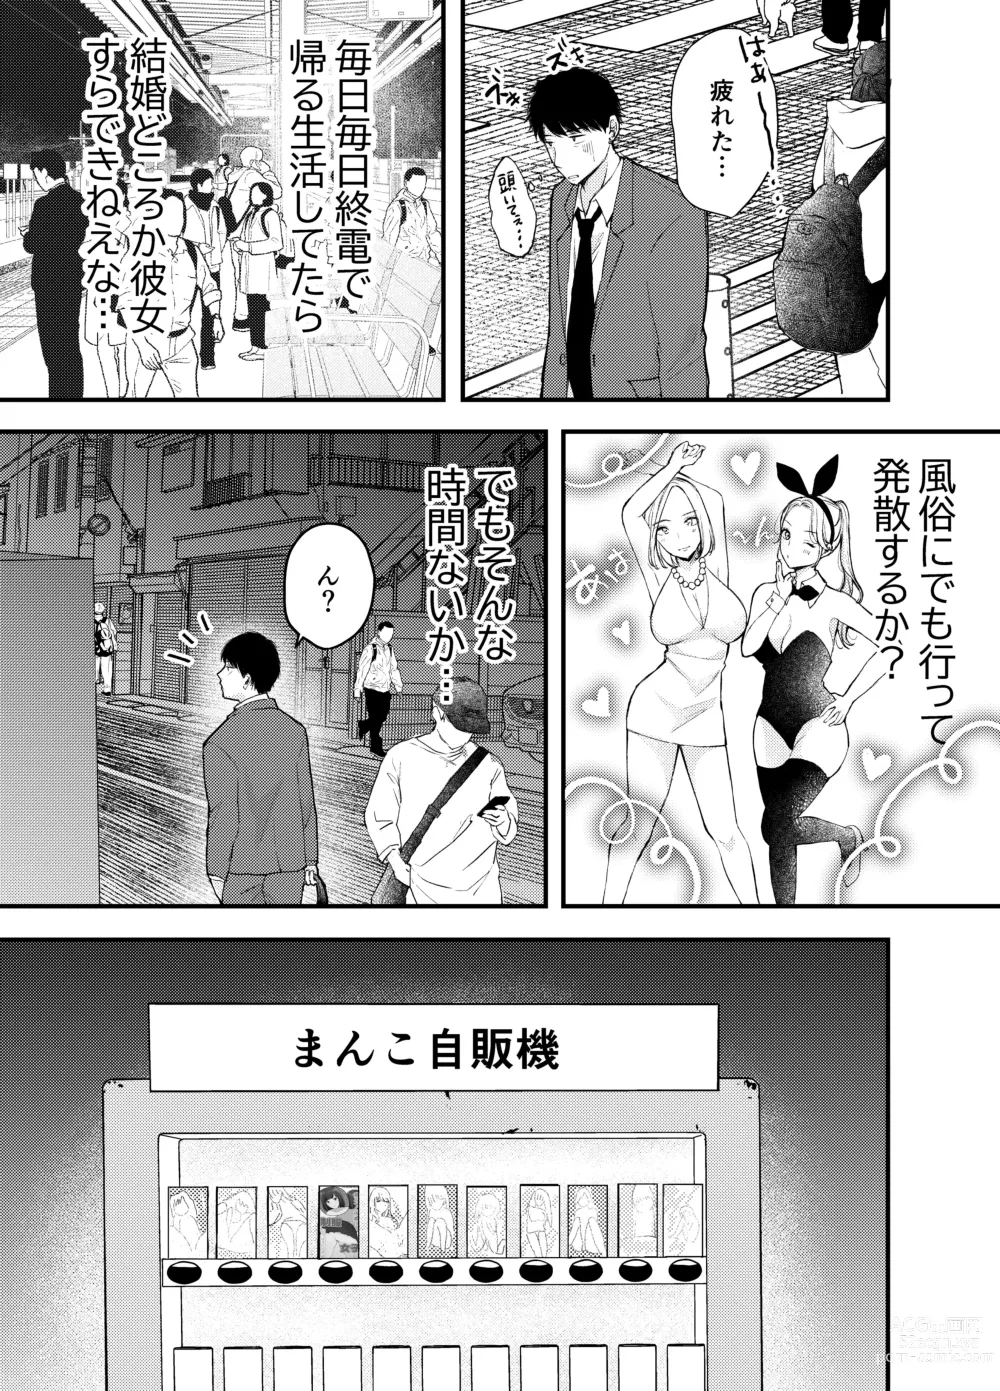 Page 2 of doujinshi Manko Jihanki